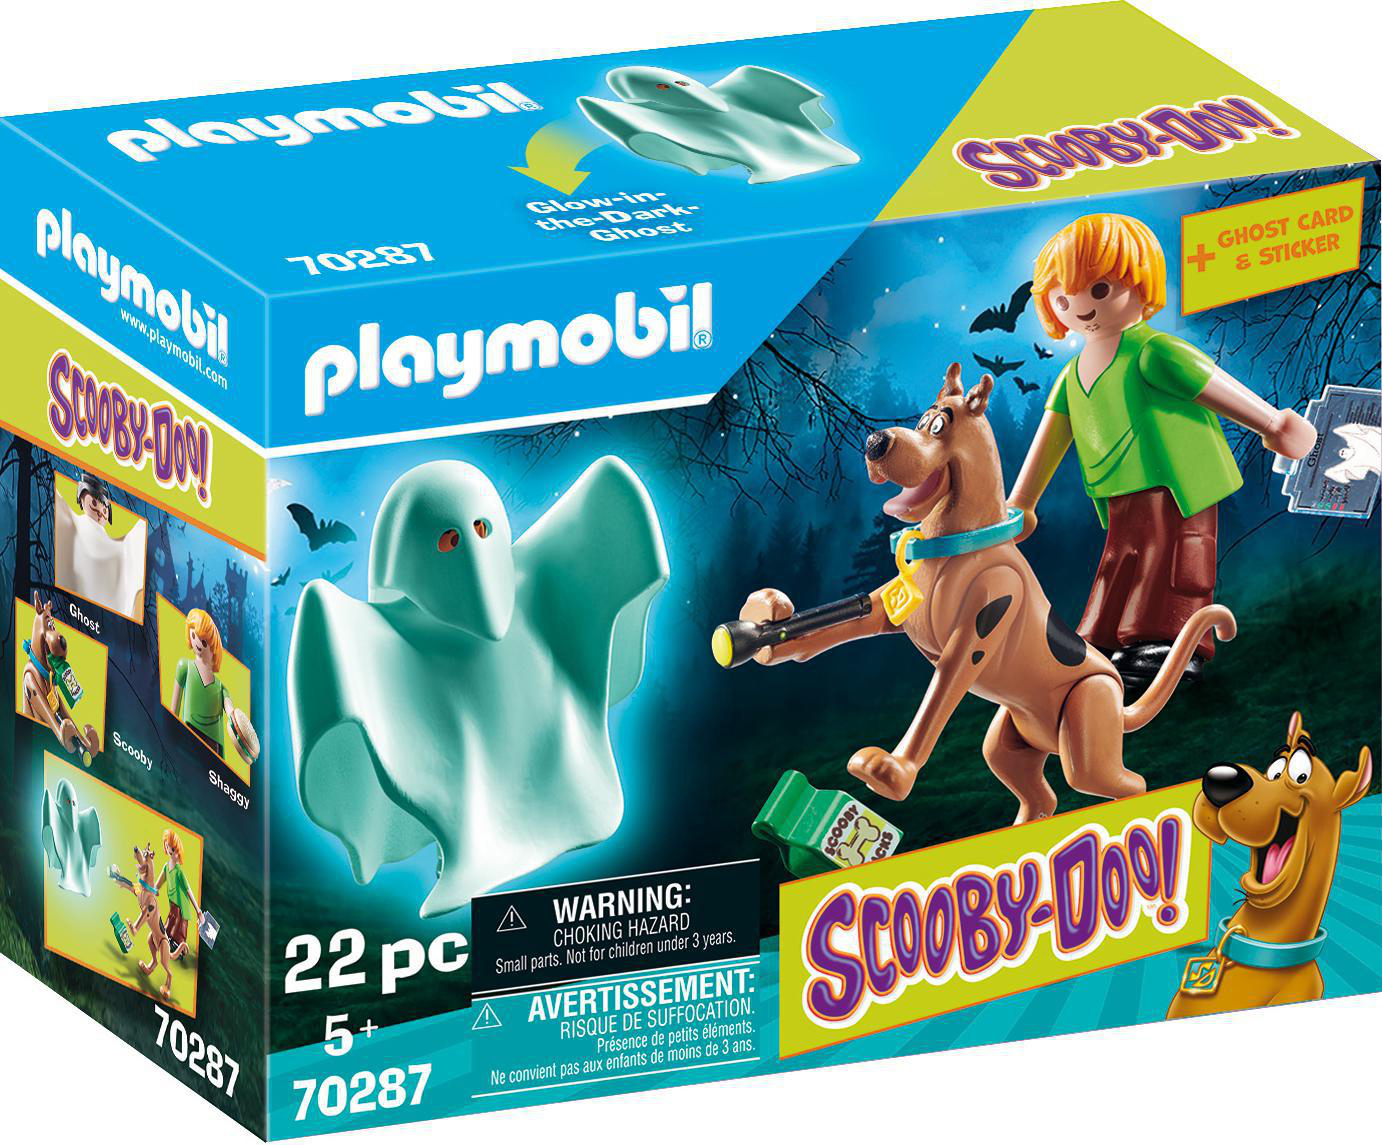 PLAYMOBIL 70287 SCOOBY-DOO! Spielset, mit Mehrfarbig Geist Scooby & Shaggy